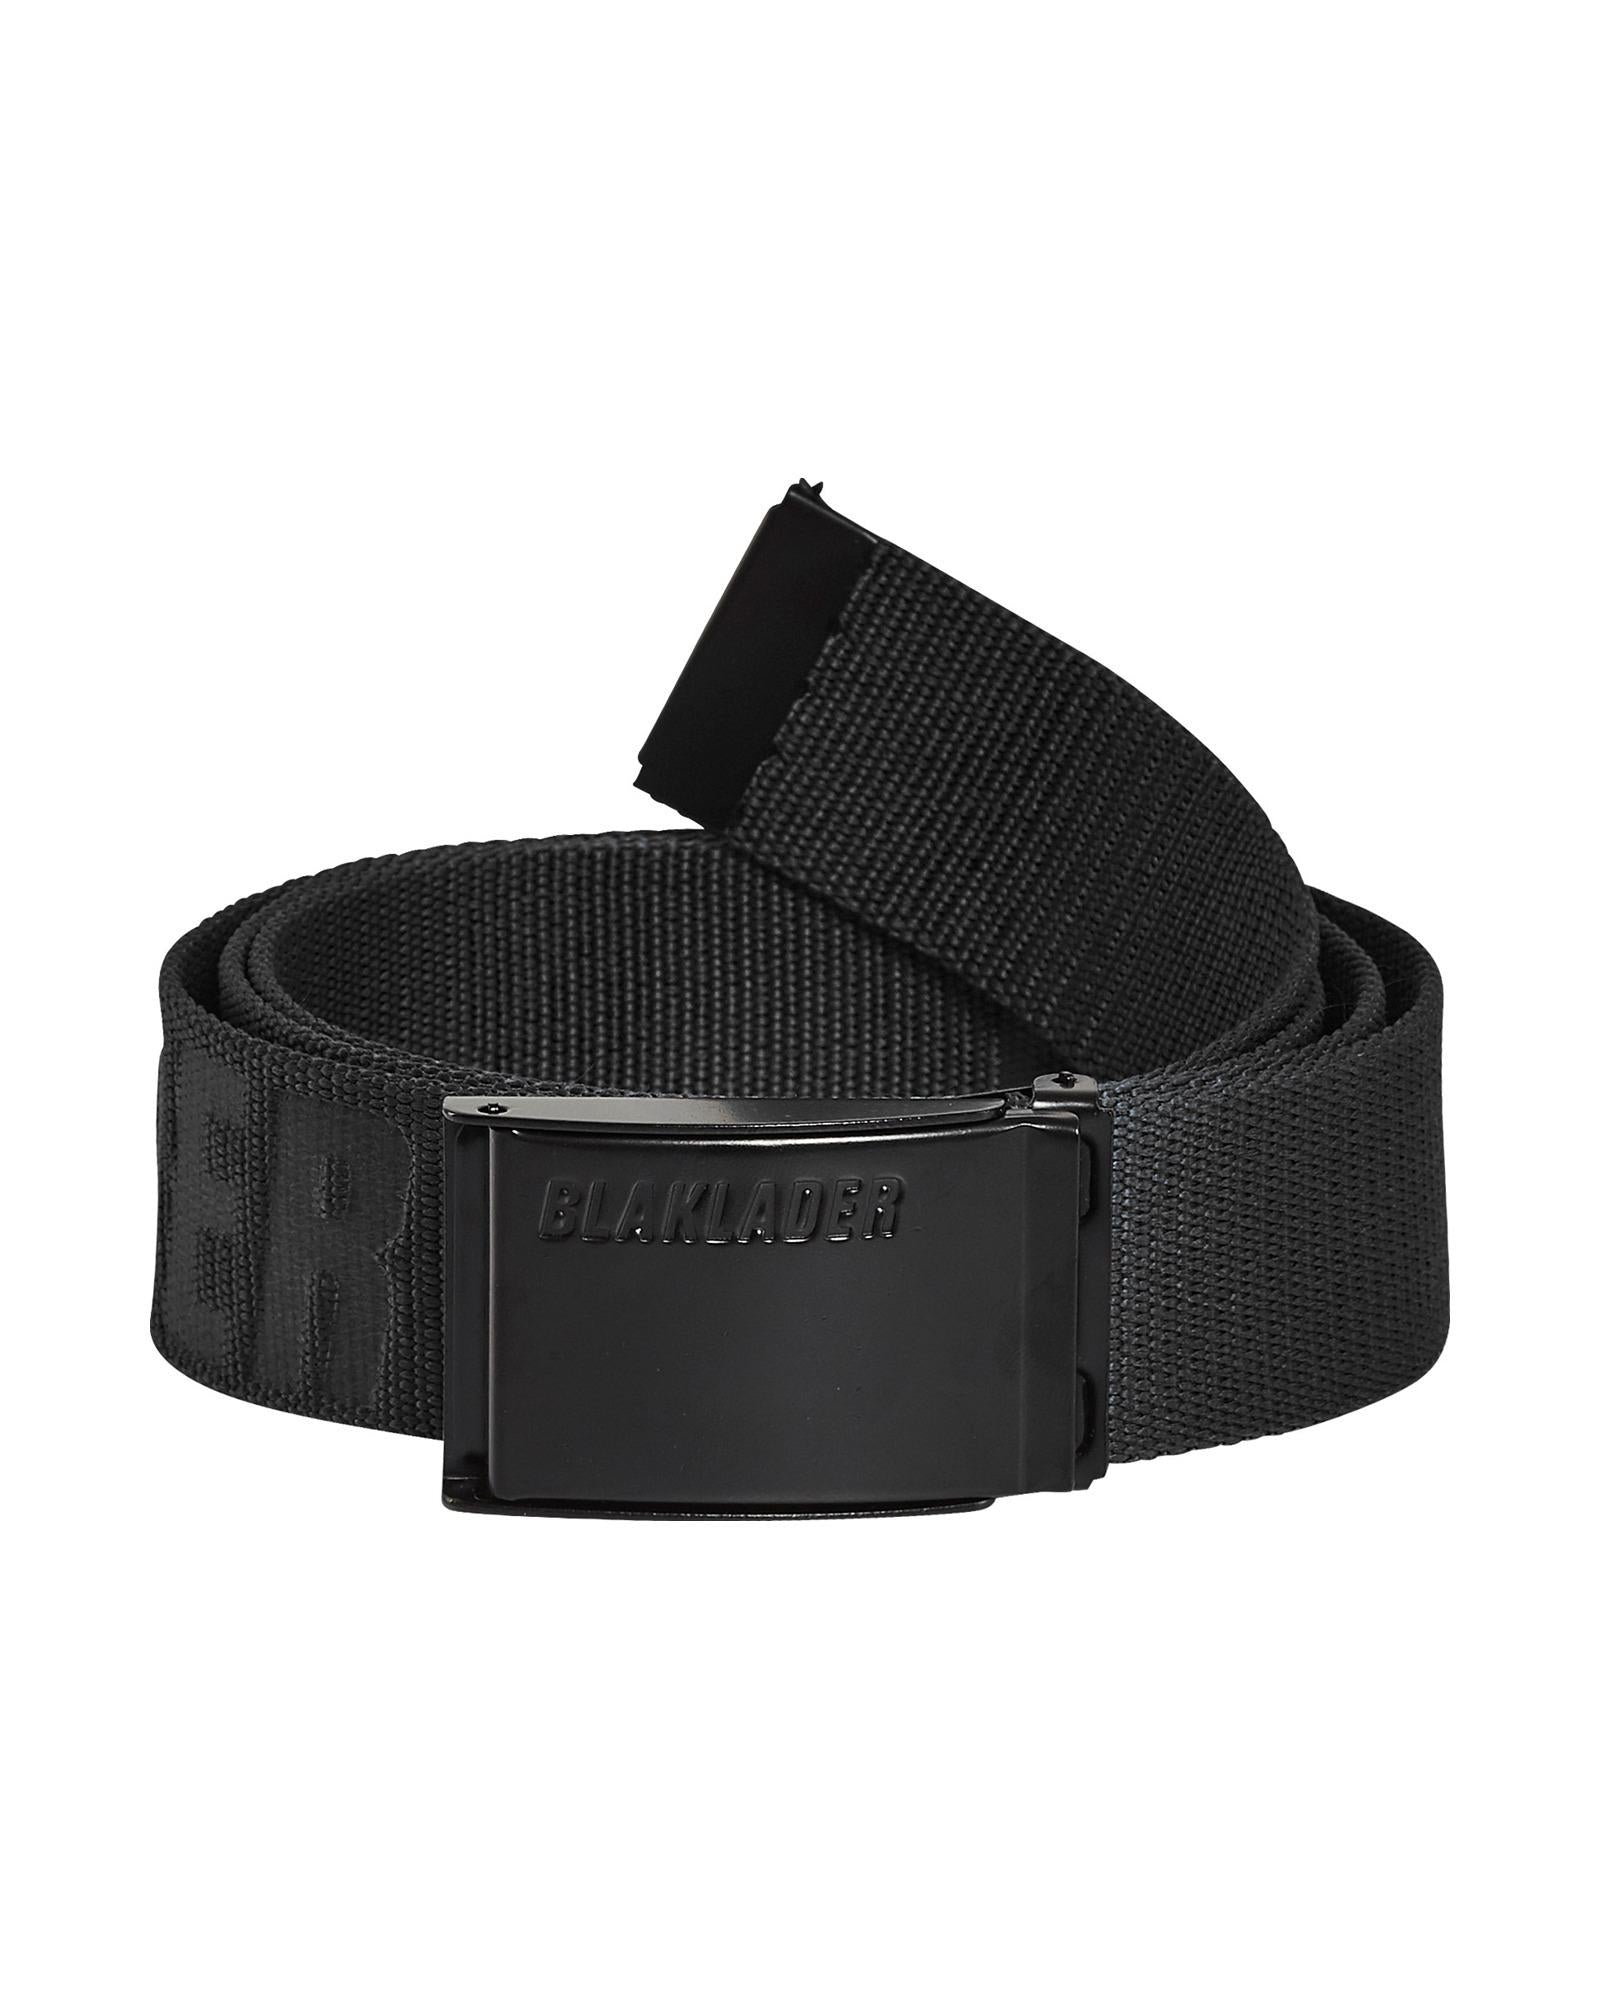 Blaklader black 160cm extra long adjustable woven belt with metal buckle #4094